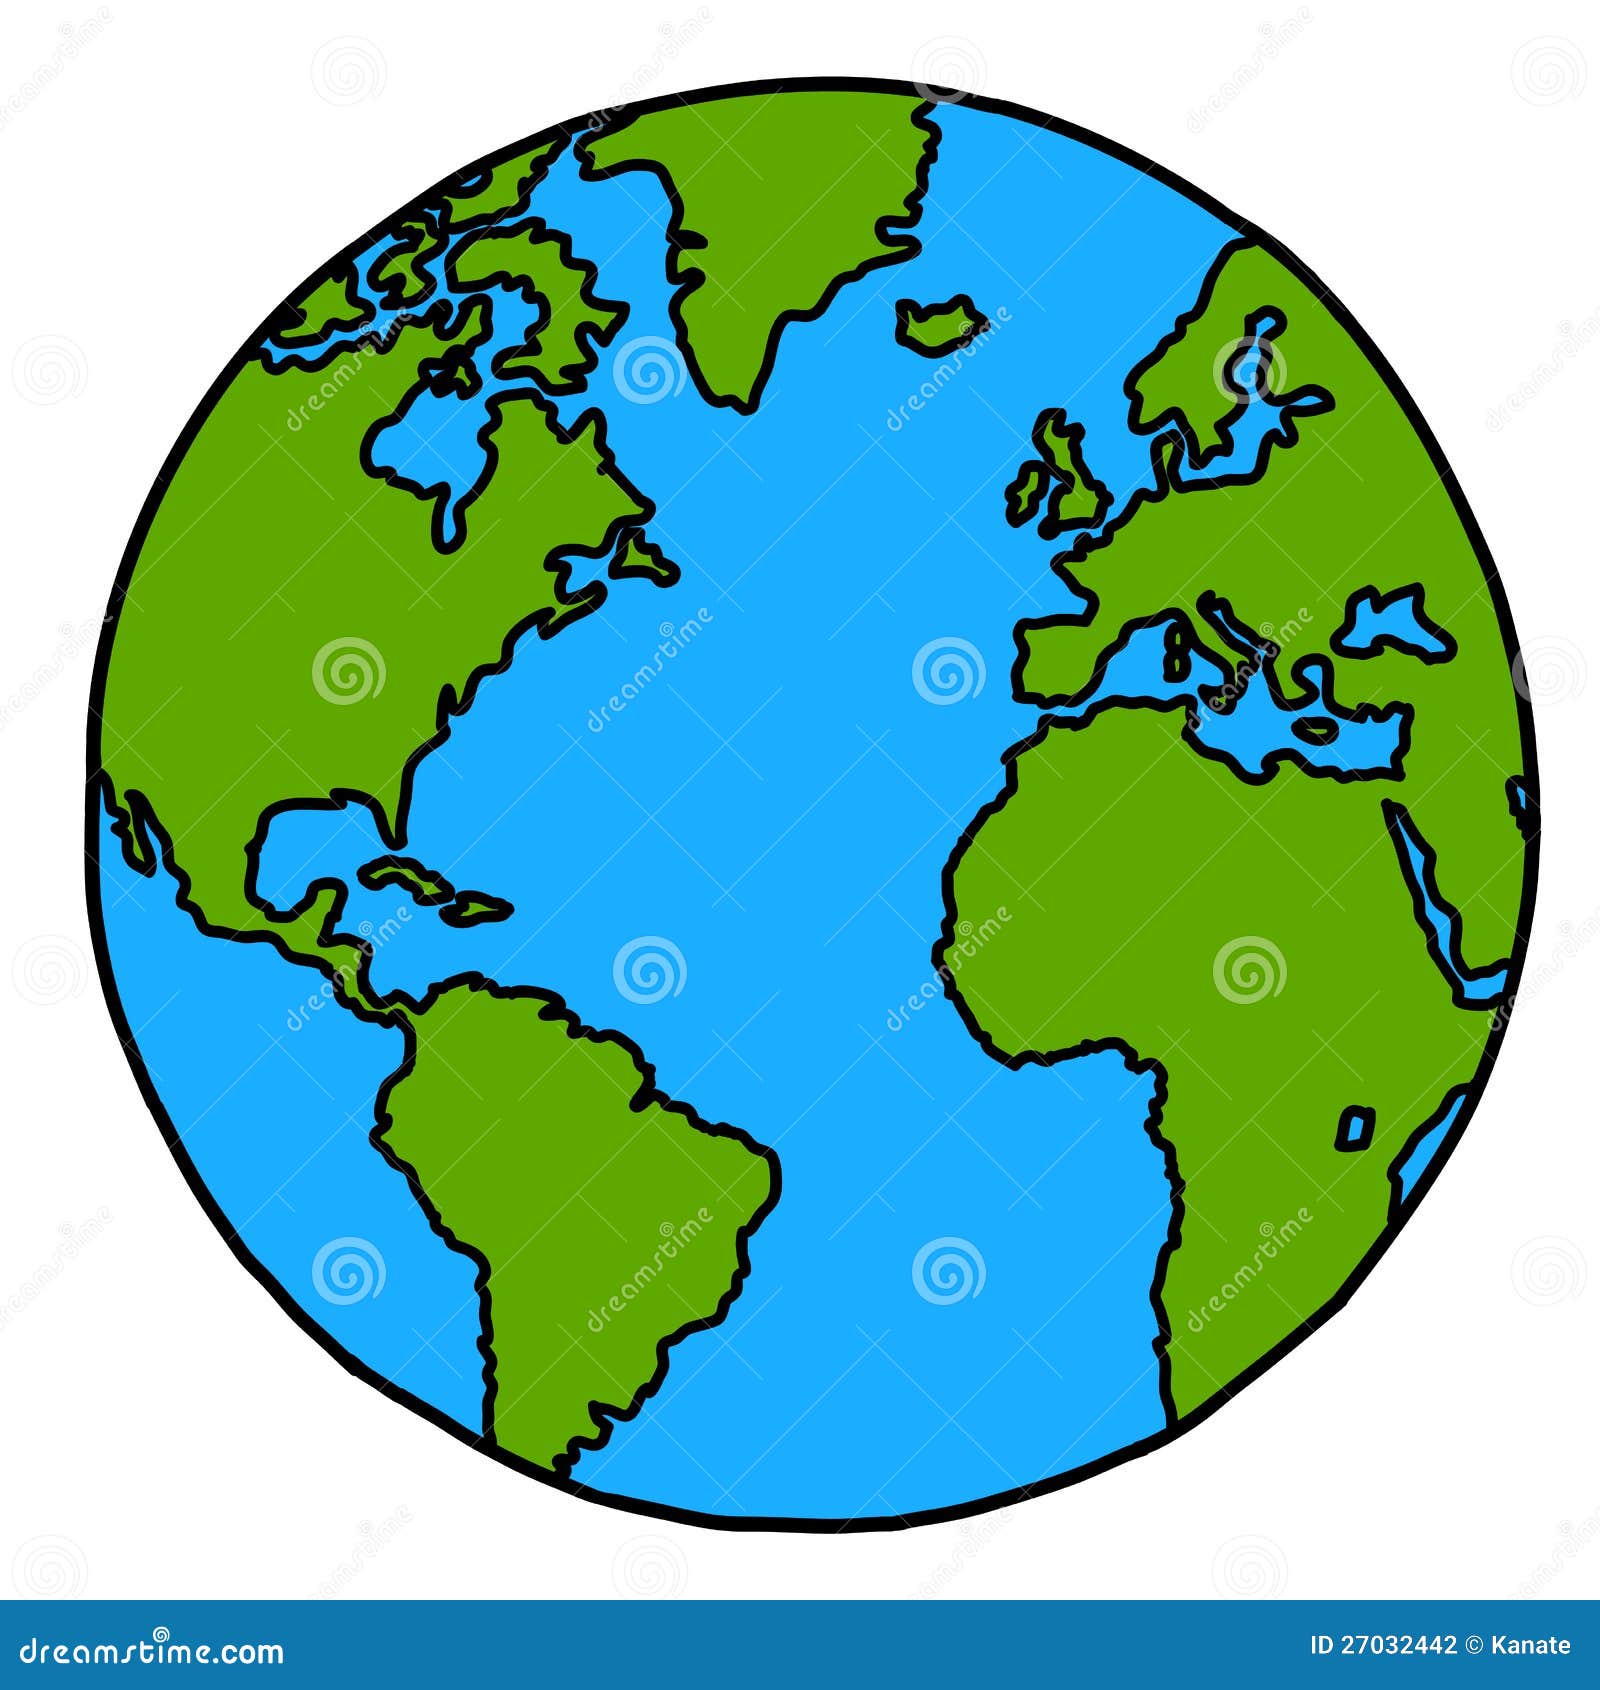 Planet Earth Cartoon. Stock Photography - Image: 27032442